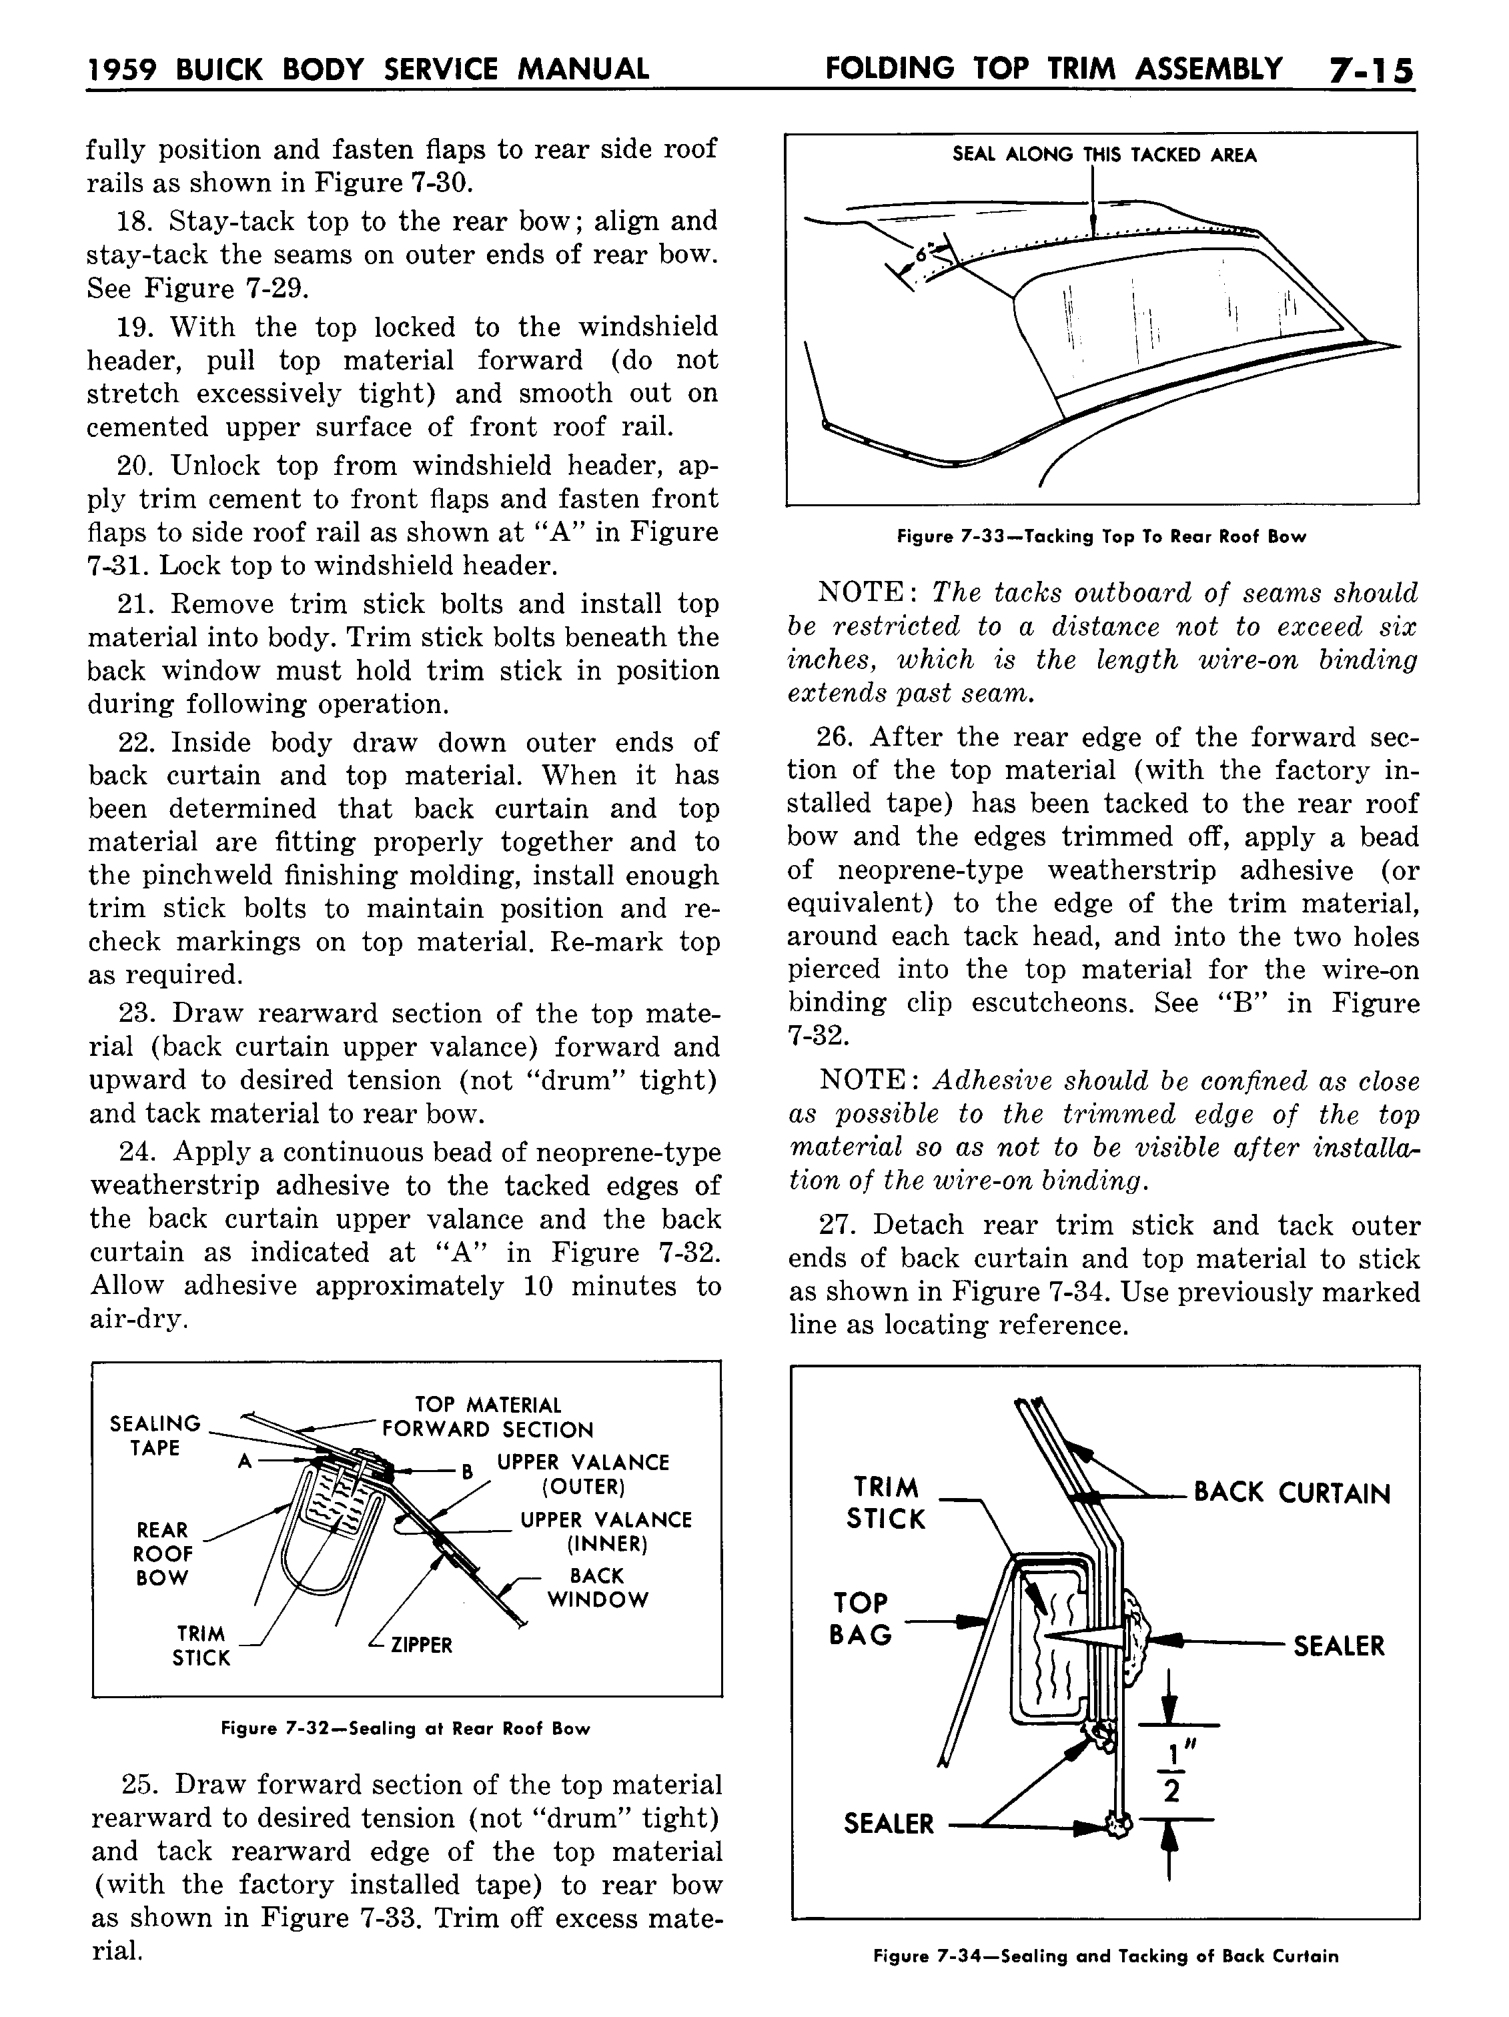 n_08 1959 Buick Body Service-Folding Top_15.jpg